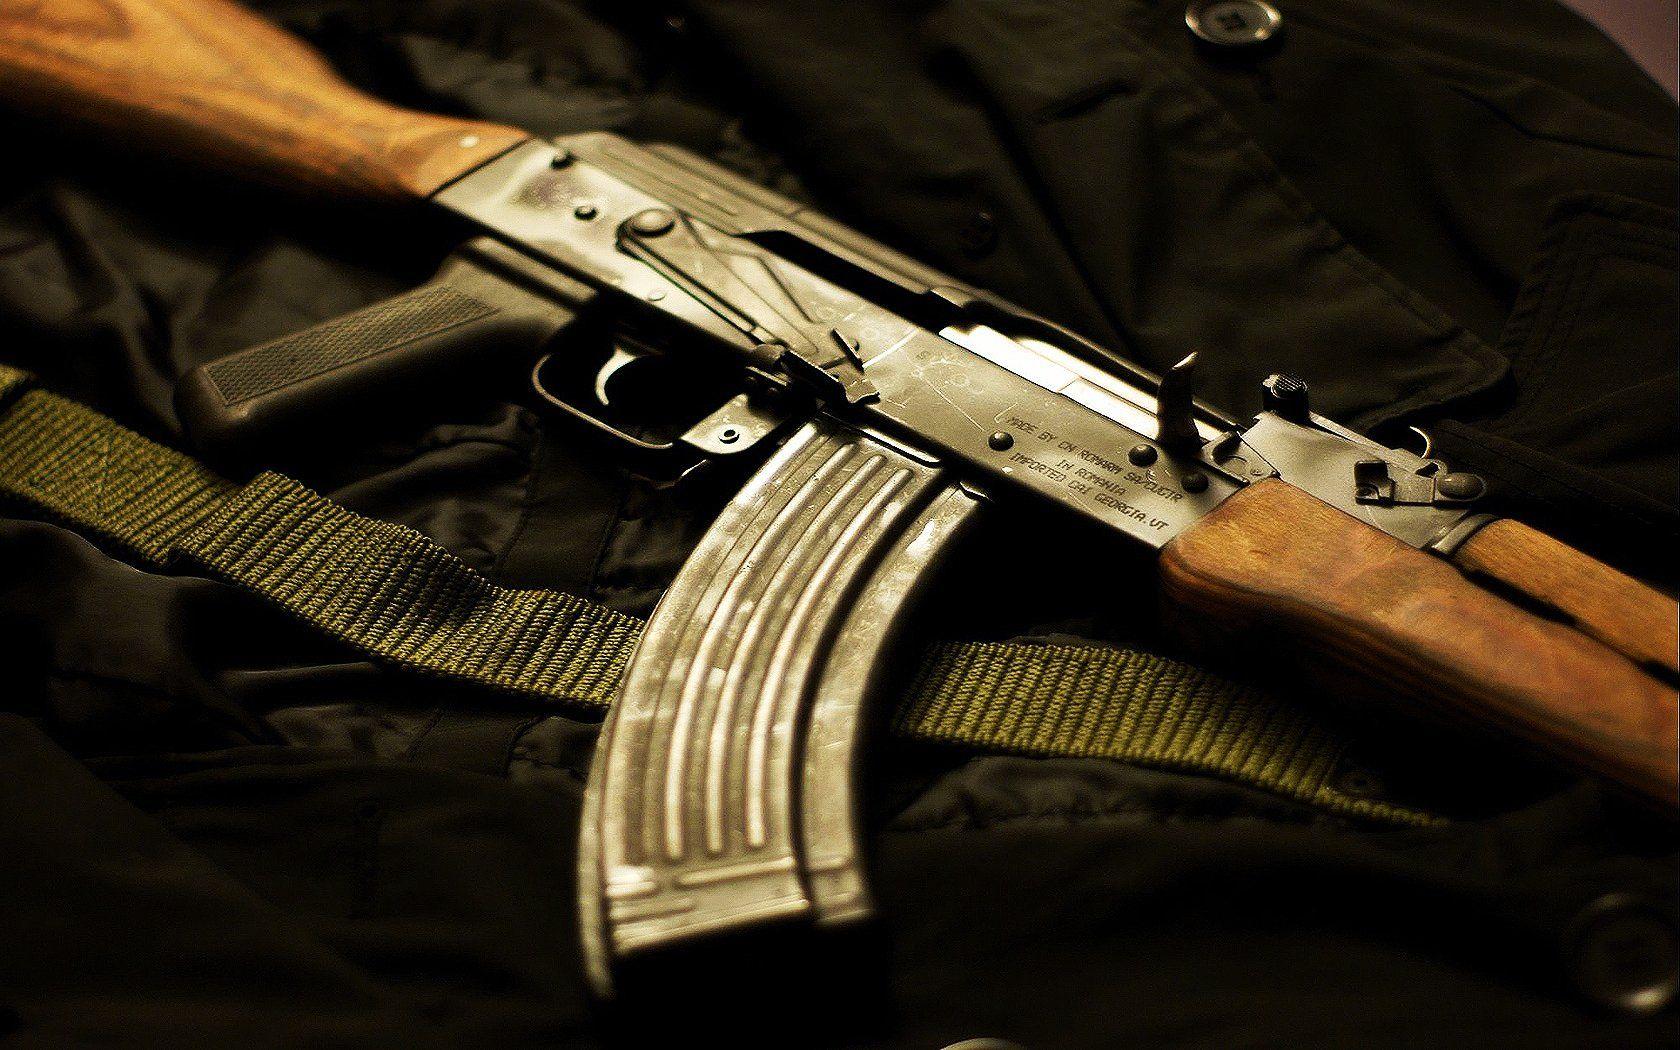 Akm Assault Rifle Wallpaper and Background Imagex1050